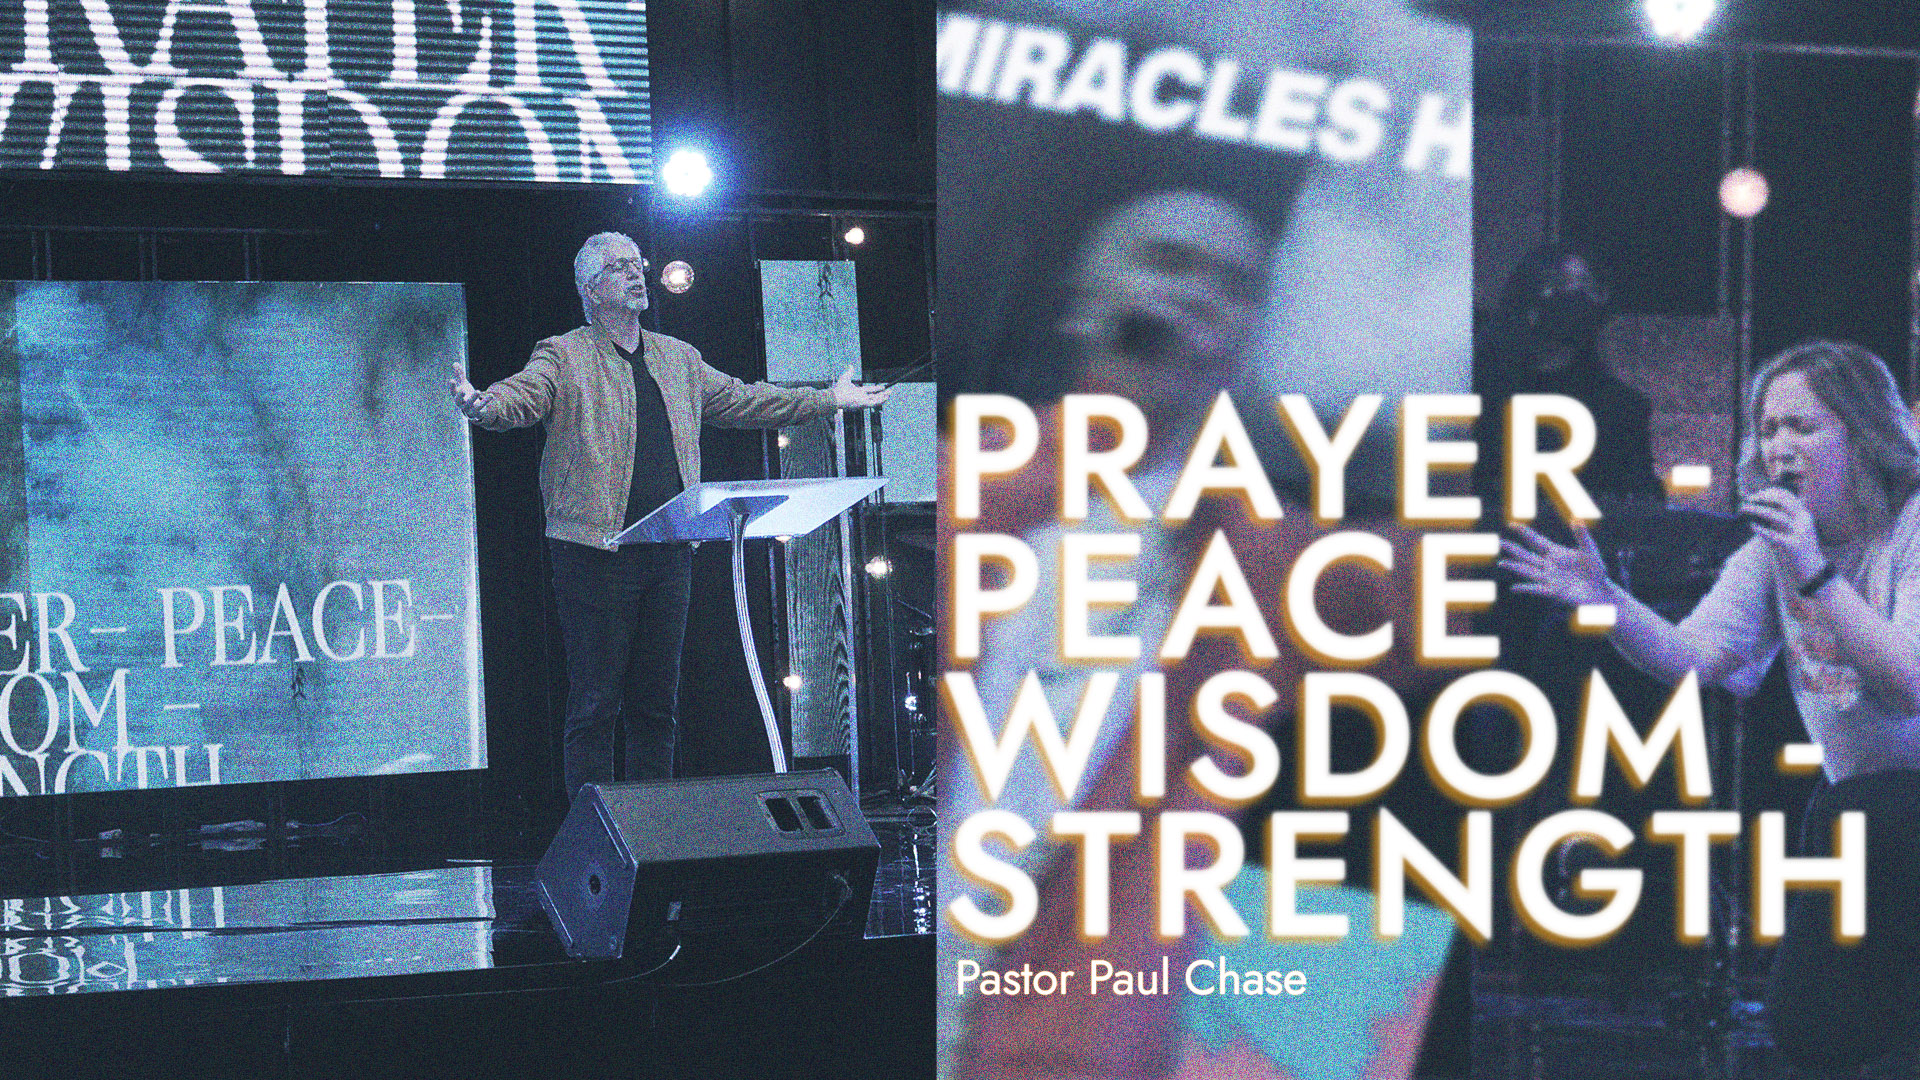 PRAYER - PEACE - WISDOM - STRENGTH Image